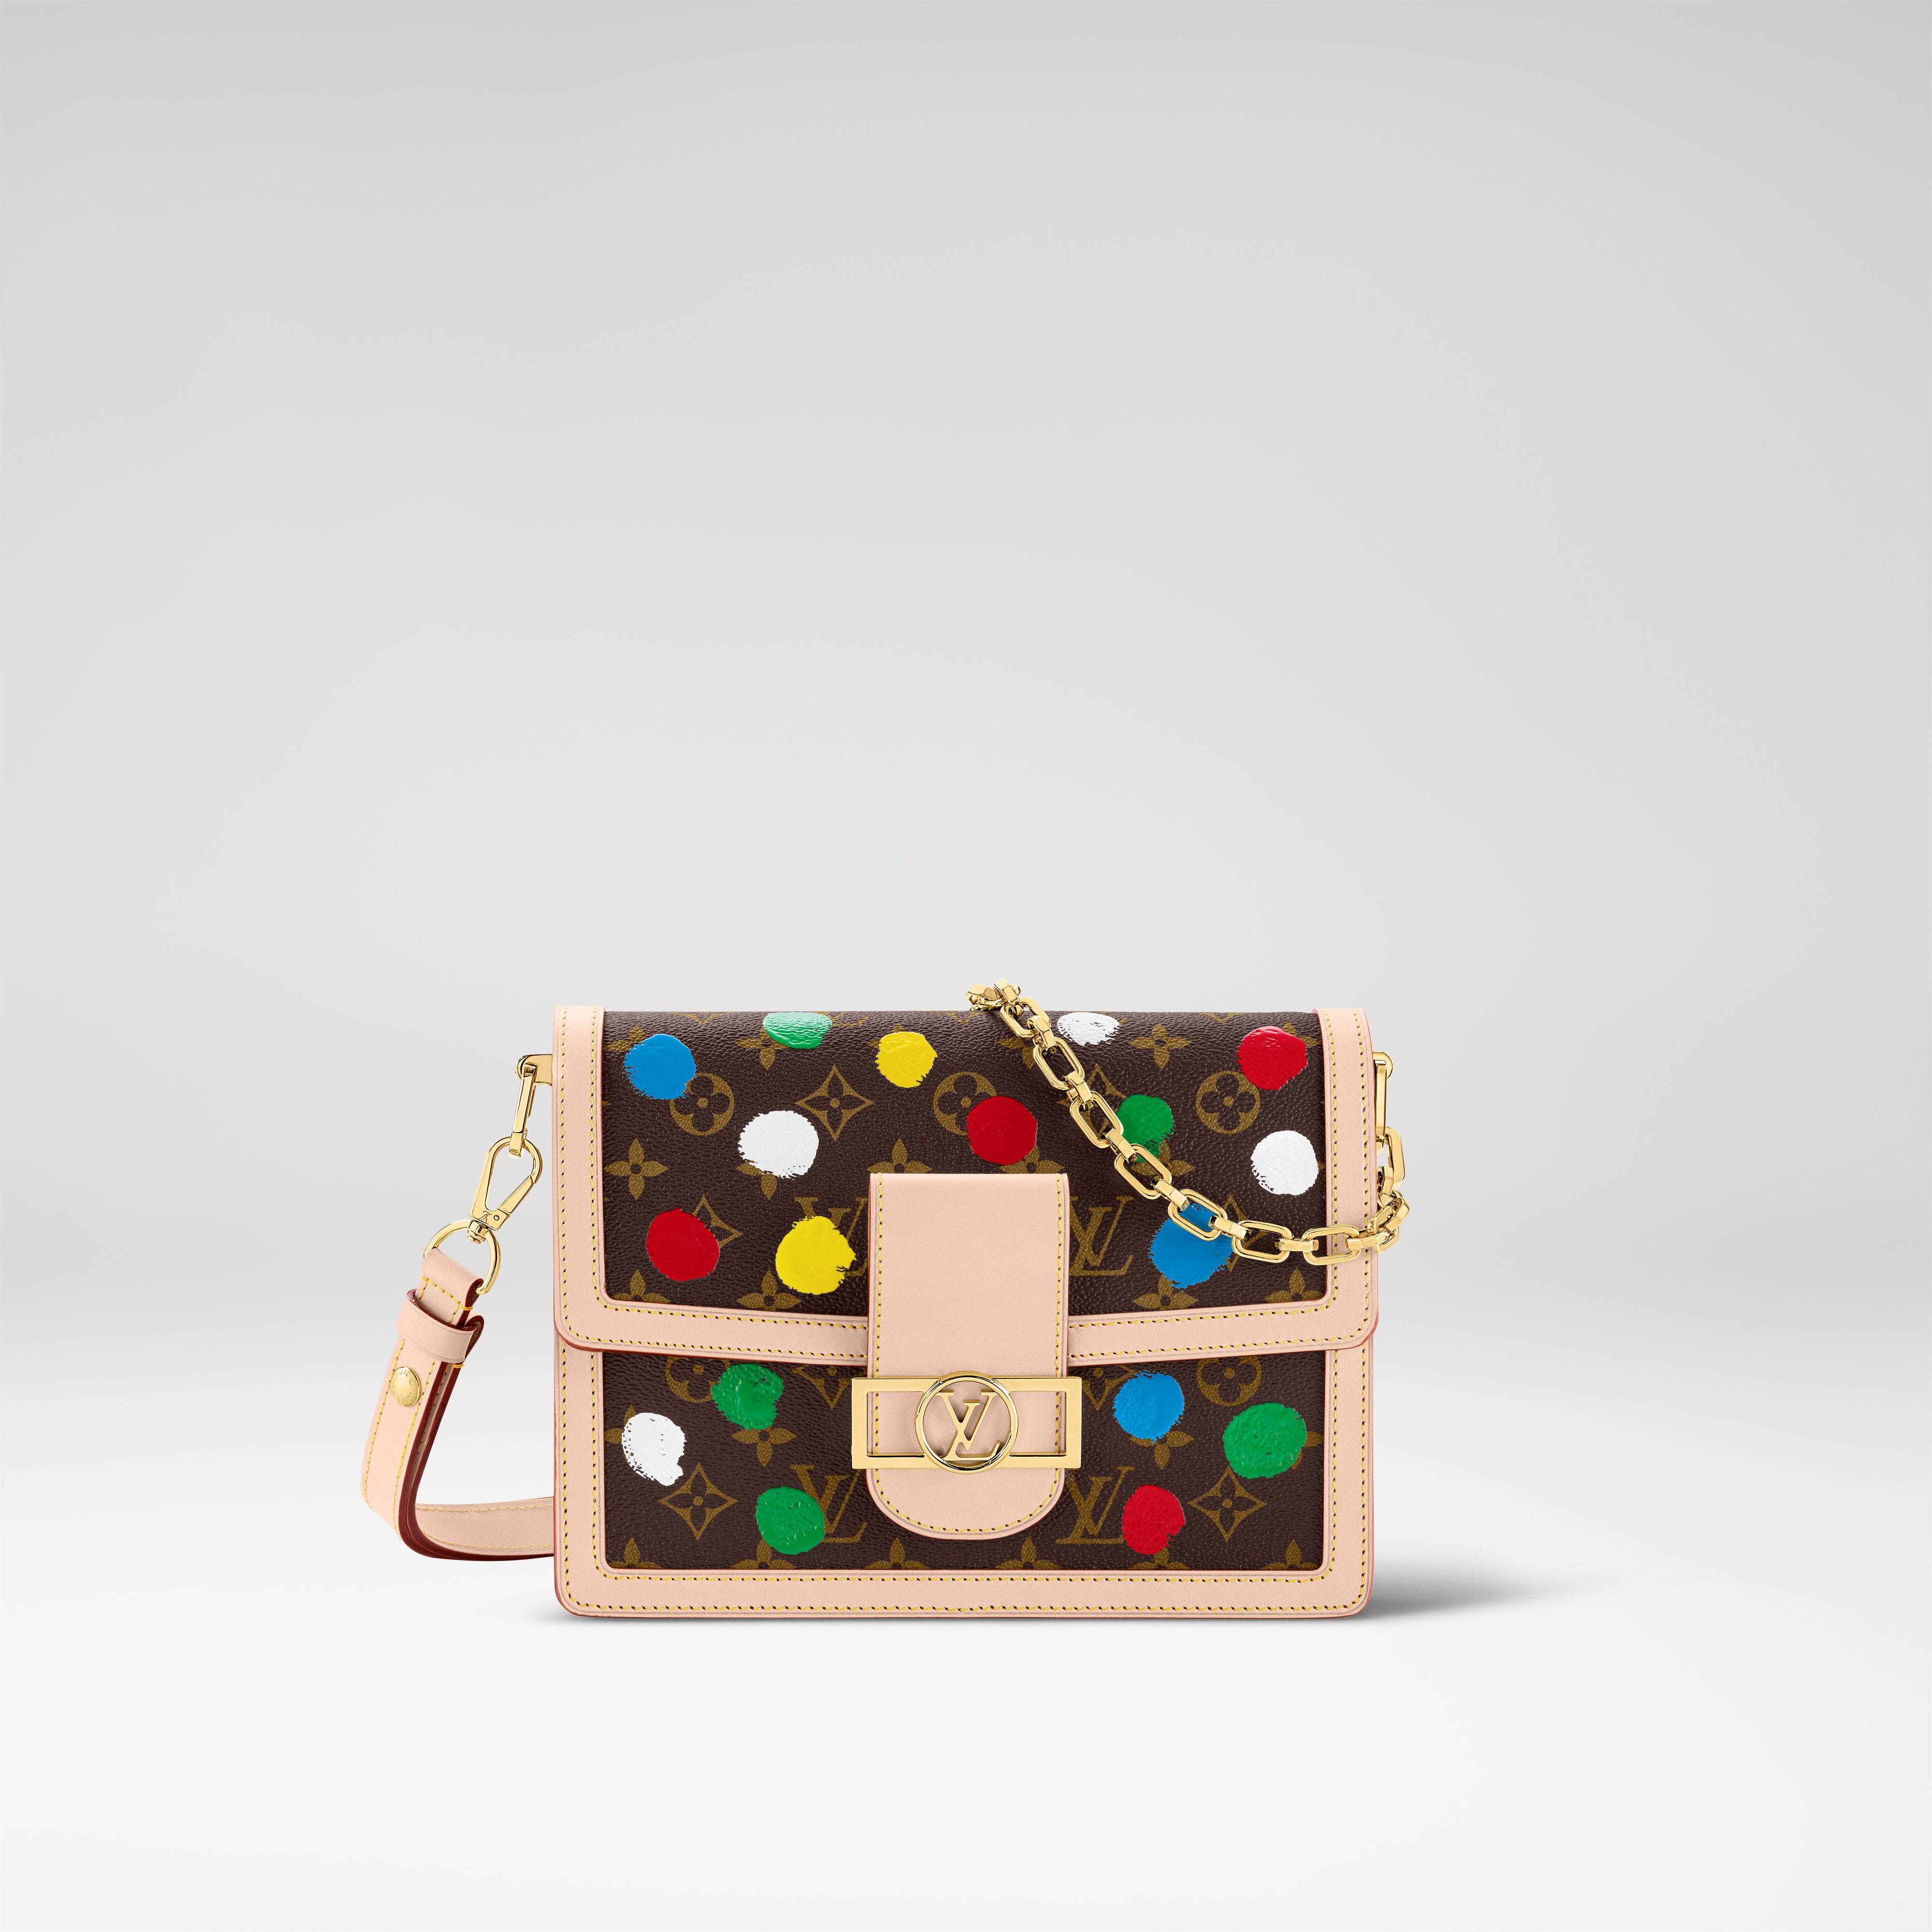 Bolsa-joia de Yayoi Kusama para Louis Vuitton ganha apenas cinco exemplares  - Harper's Bazaar » Moda, beleza e estilo de vida em um só site